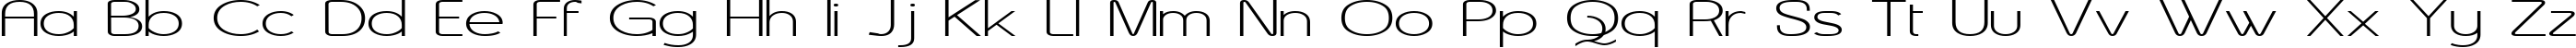 Пример написания английского алфавита шрифтом Asenine Wide